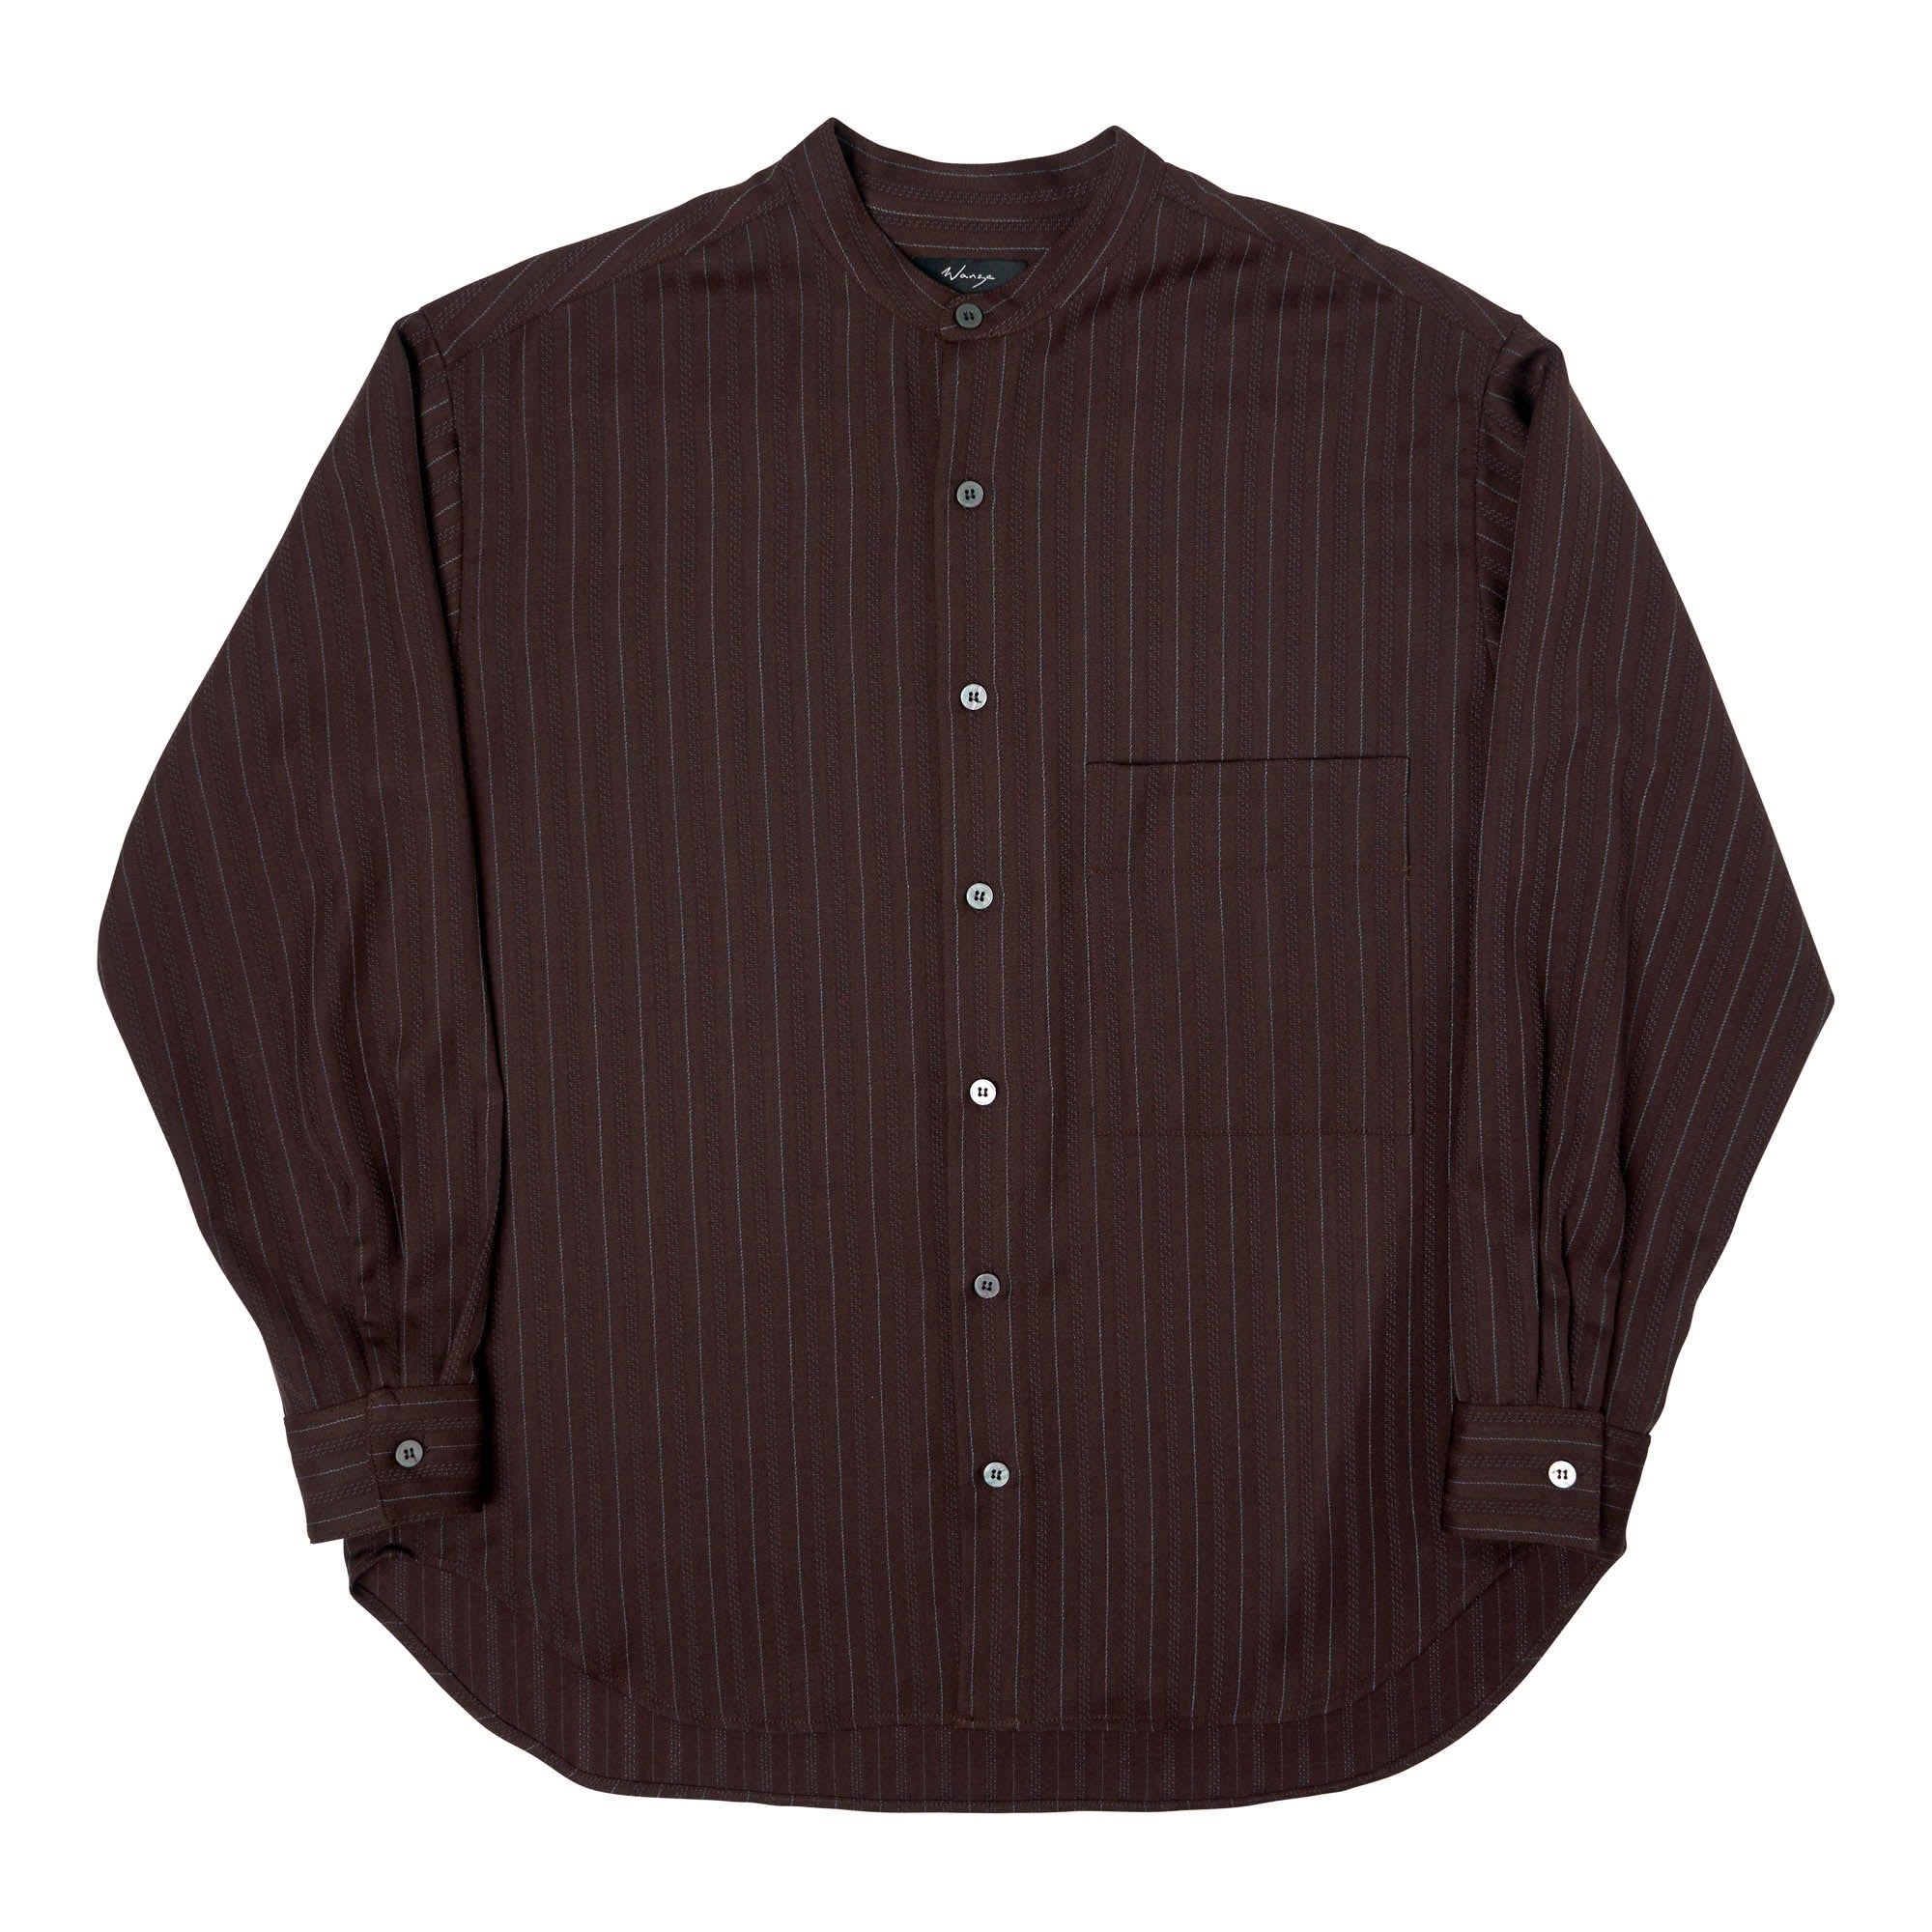 Stand Collar Shirt Virgin Wool Brown Pinstripe - PREORDER